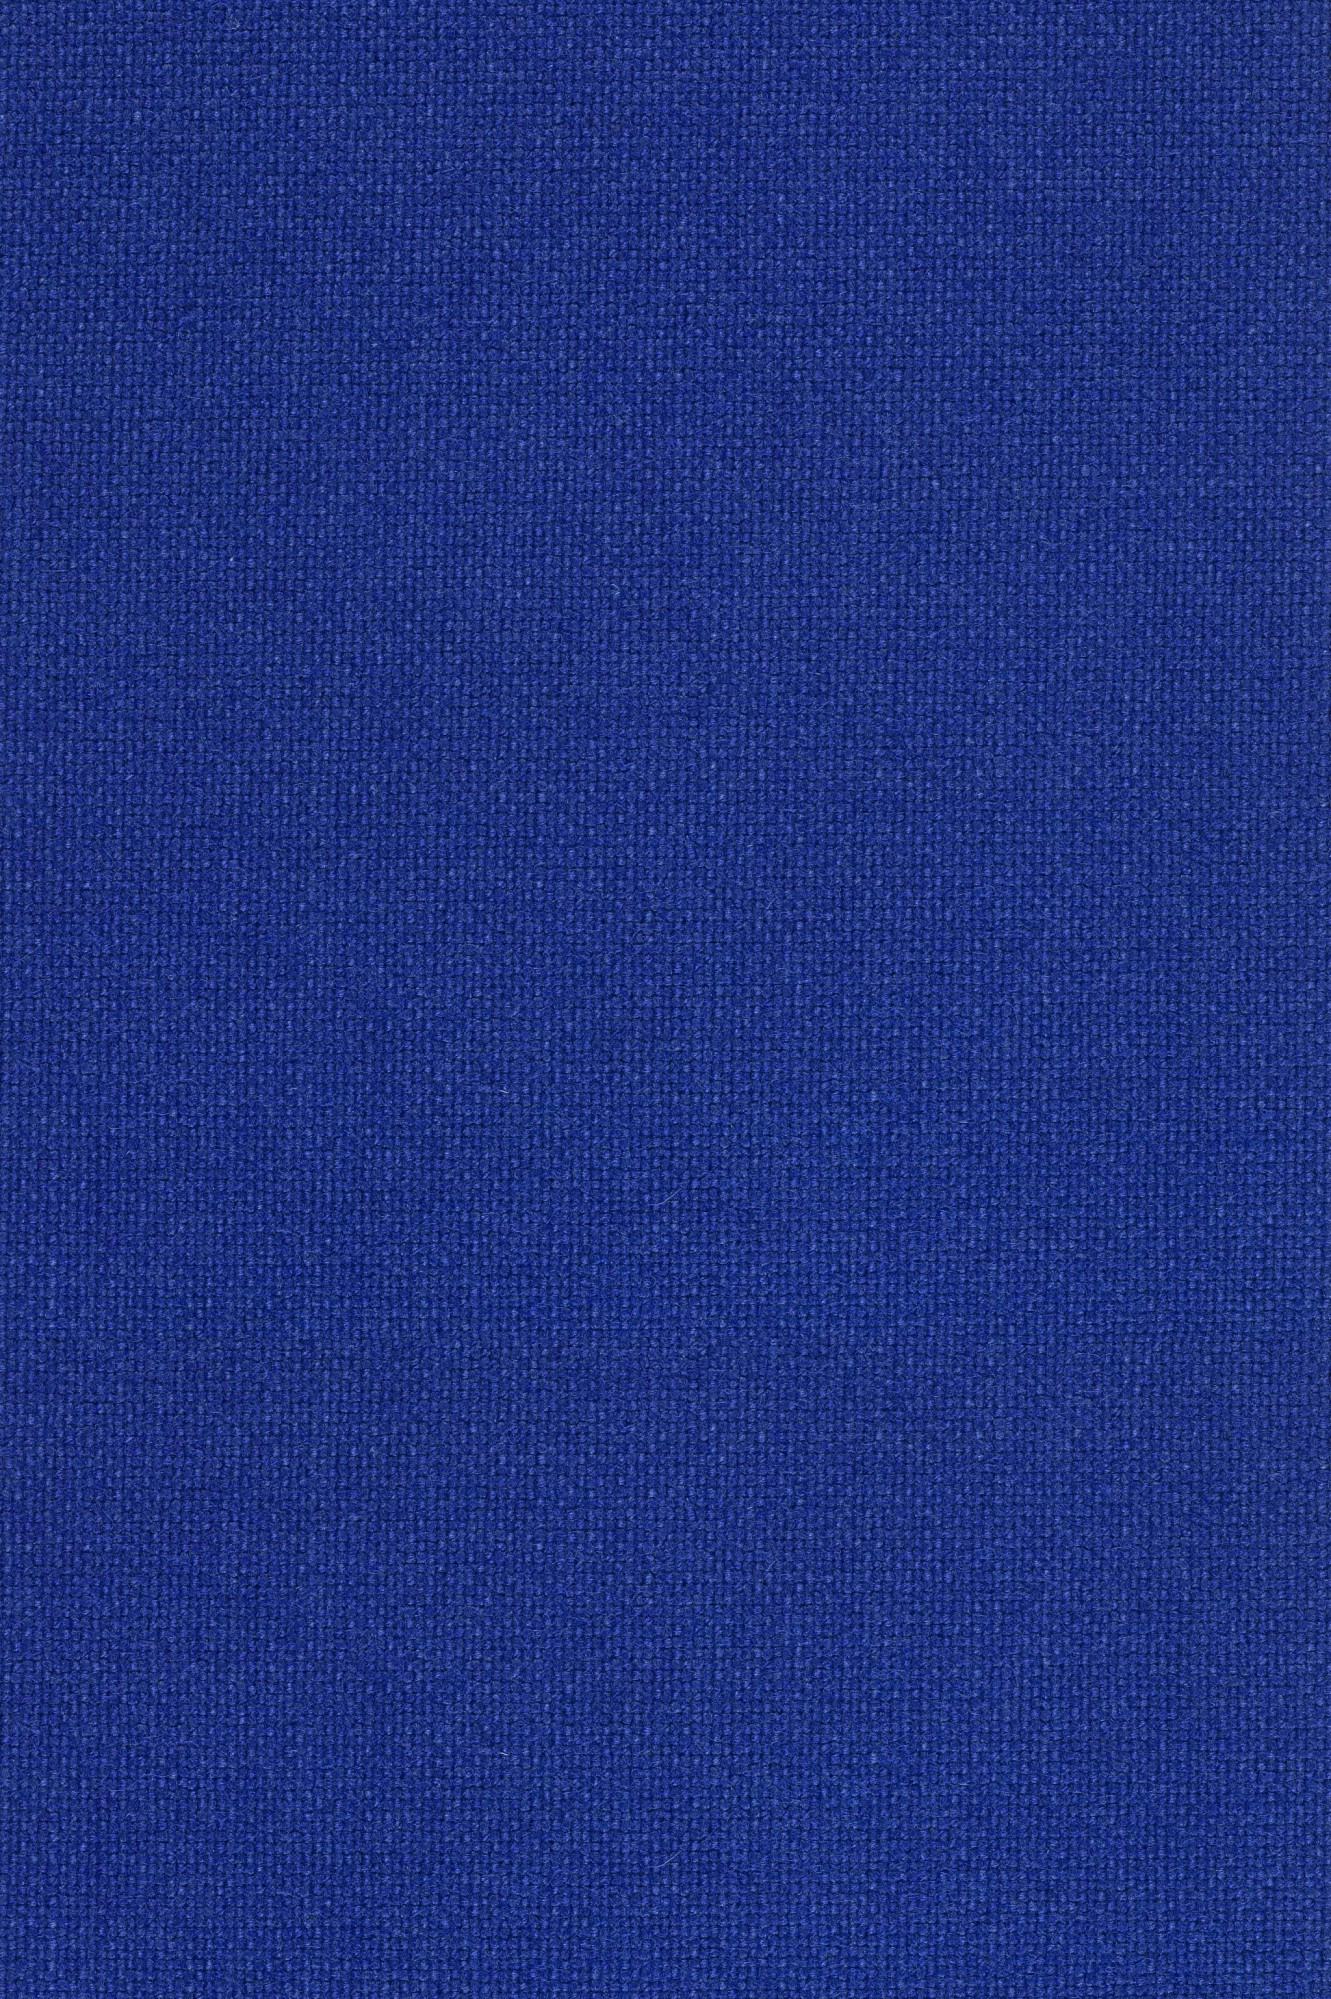 Fabric sample Hallingdal 65 753 blue